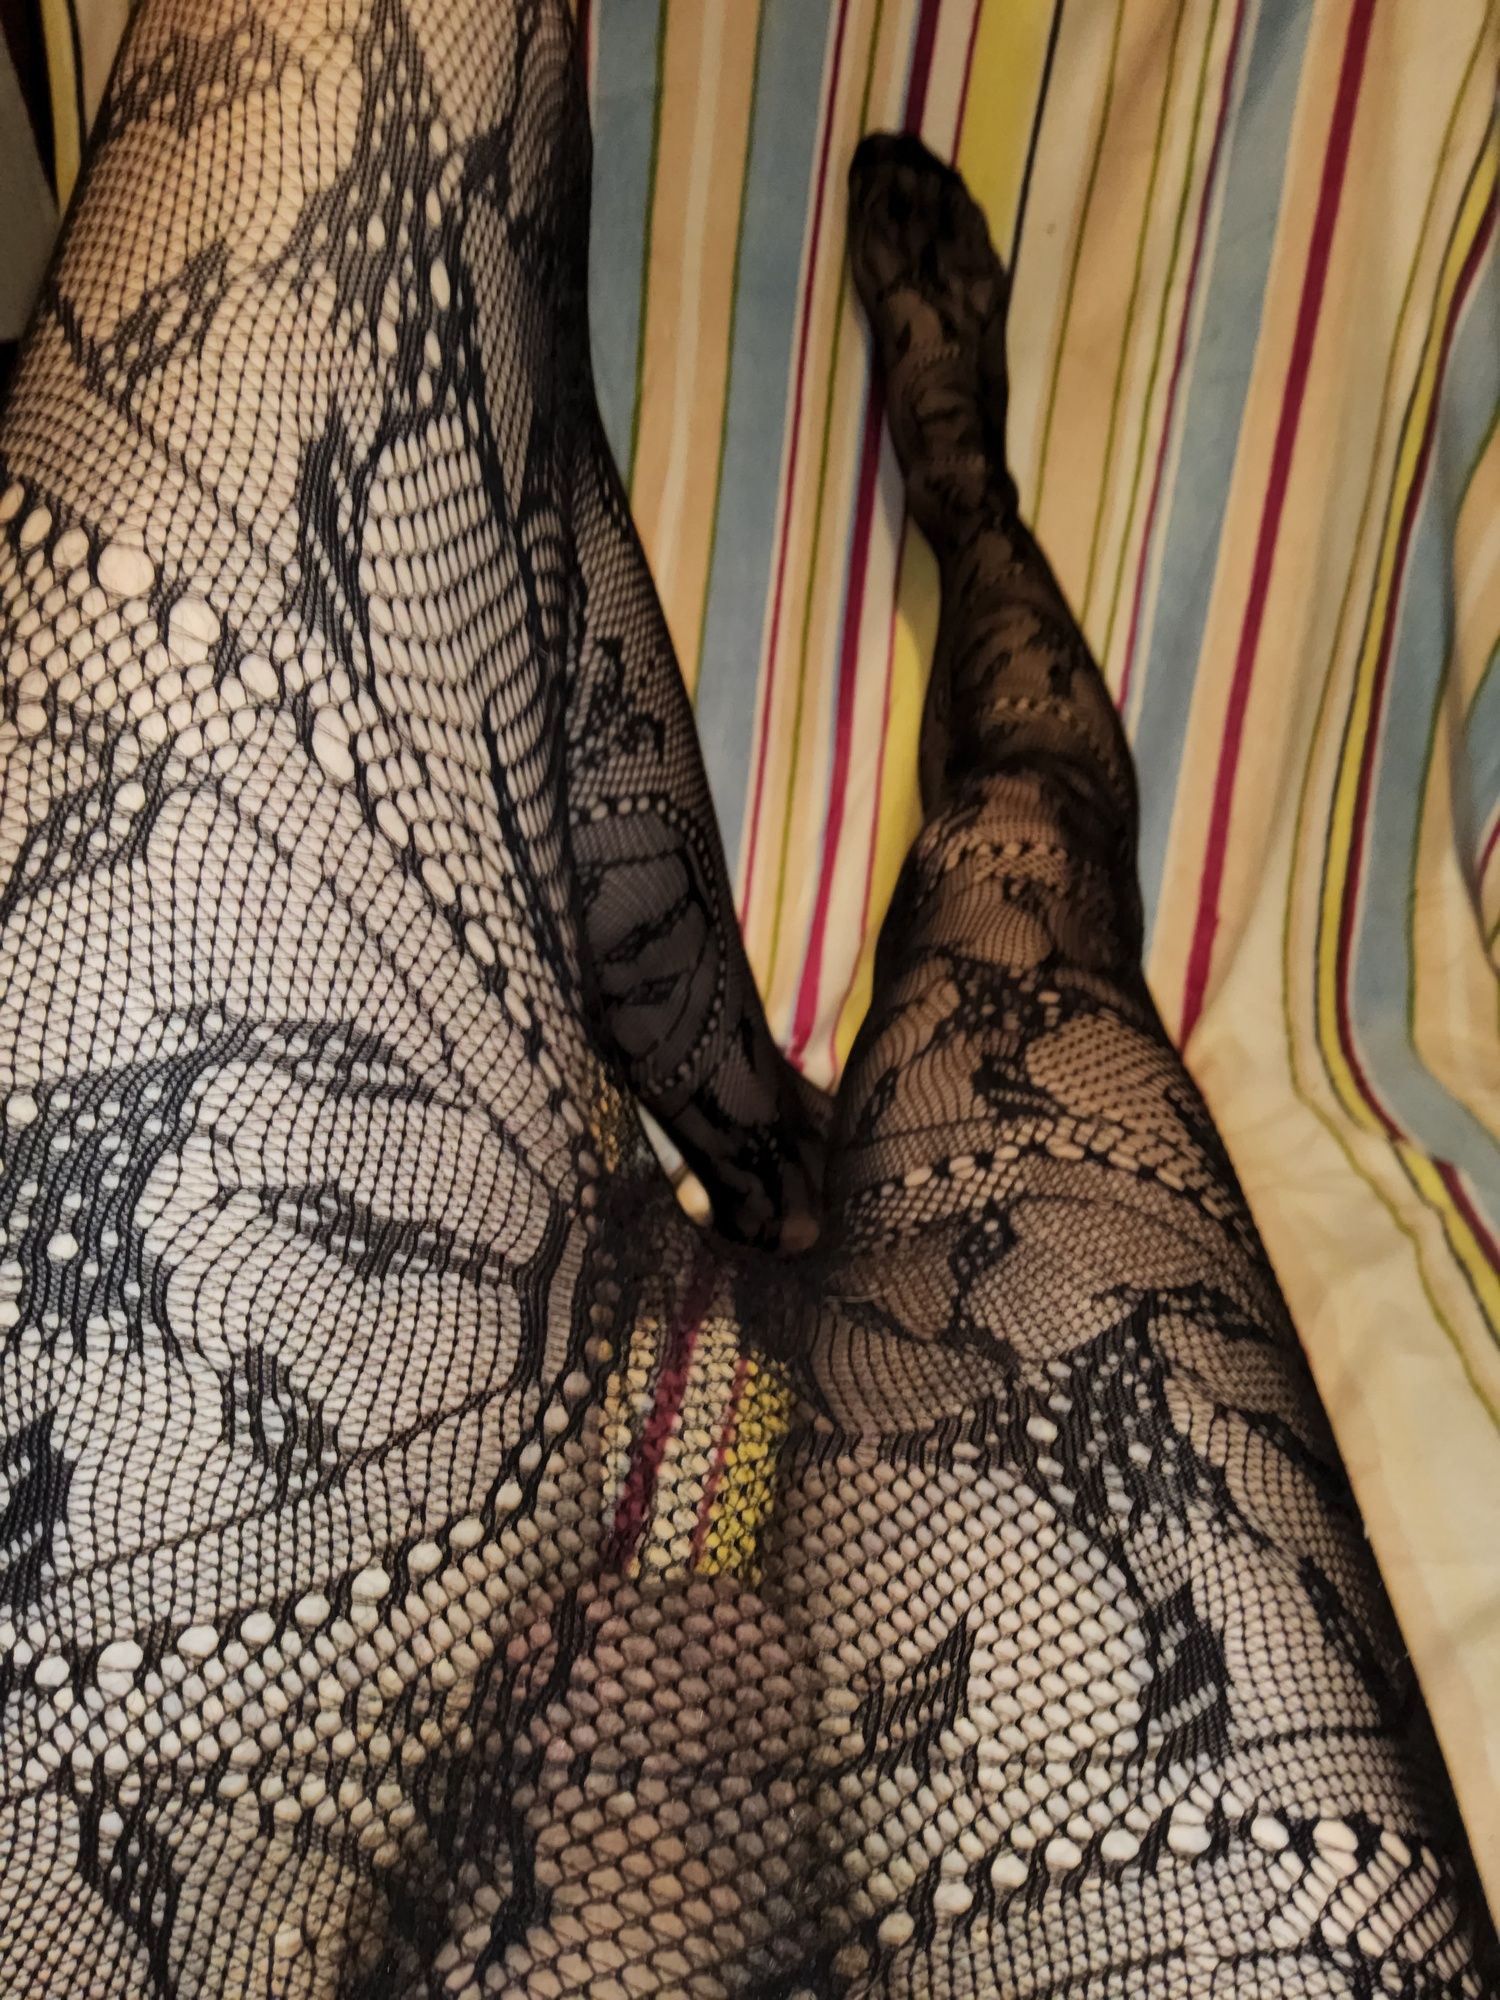 My new black patterned Pantyhose #7